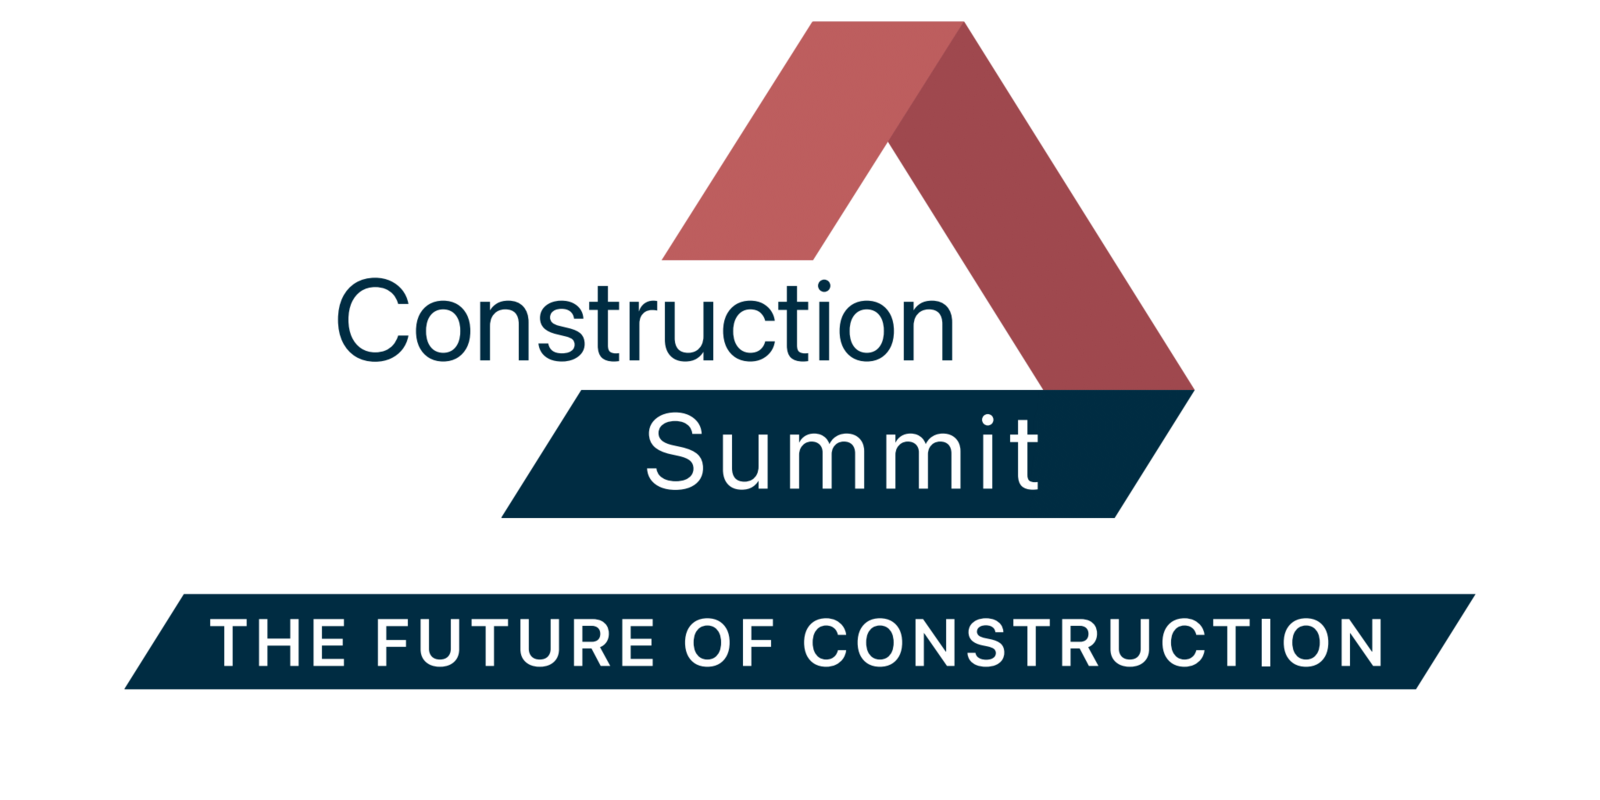 csm_Construction_Summit_Logo_Claim_2b6409fa6a.png